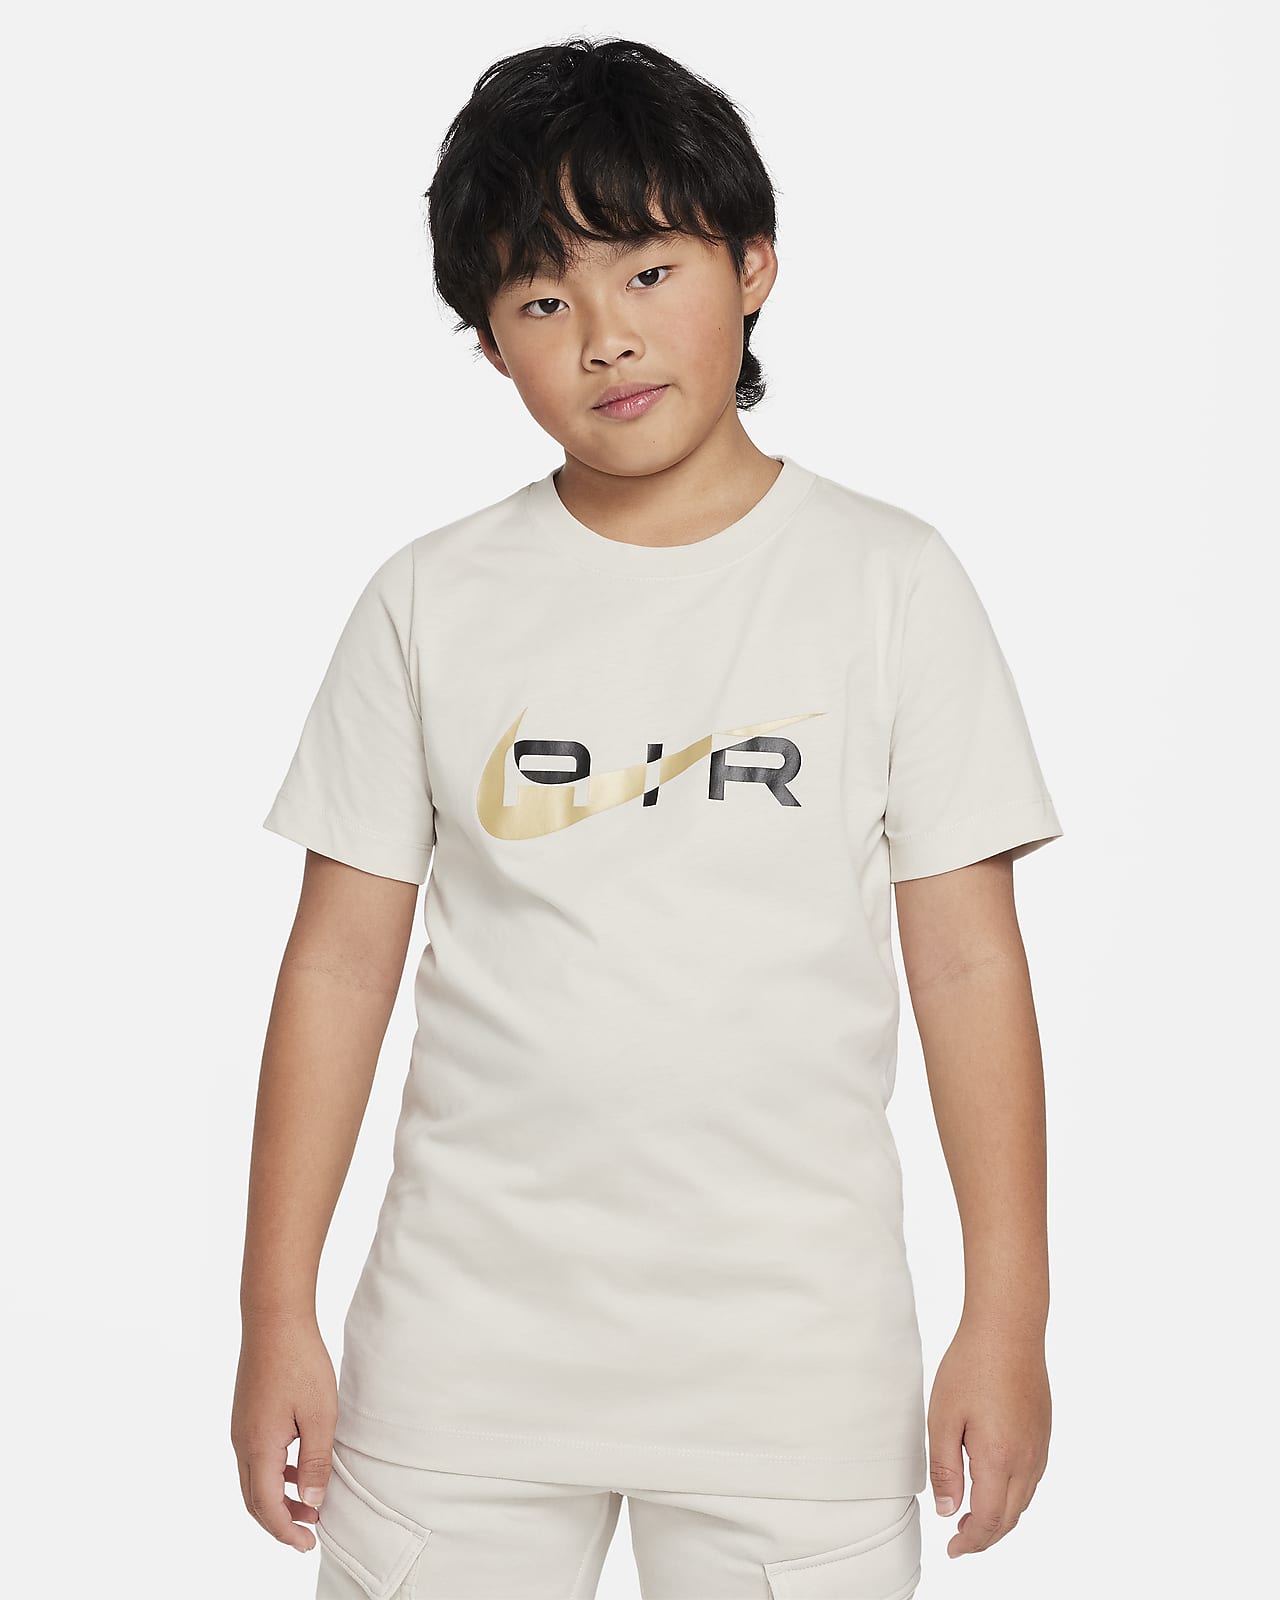 Nike Air Genç Çocuk (Erkek) Tişörtü